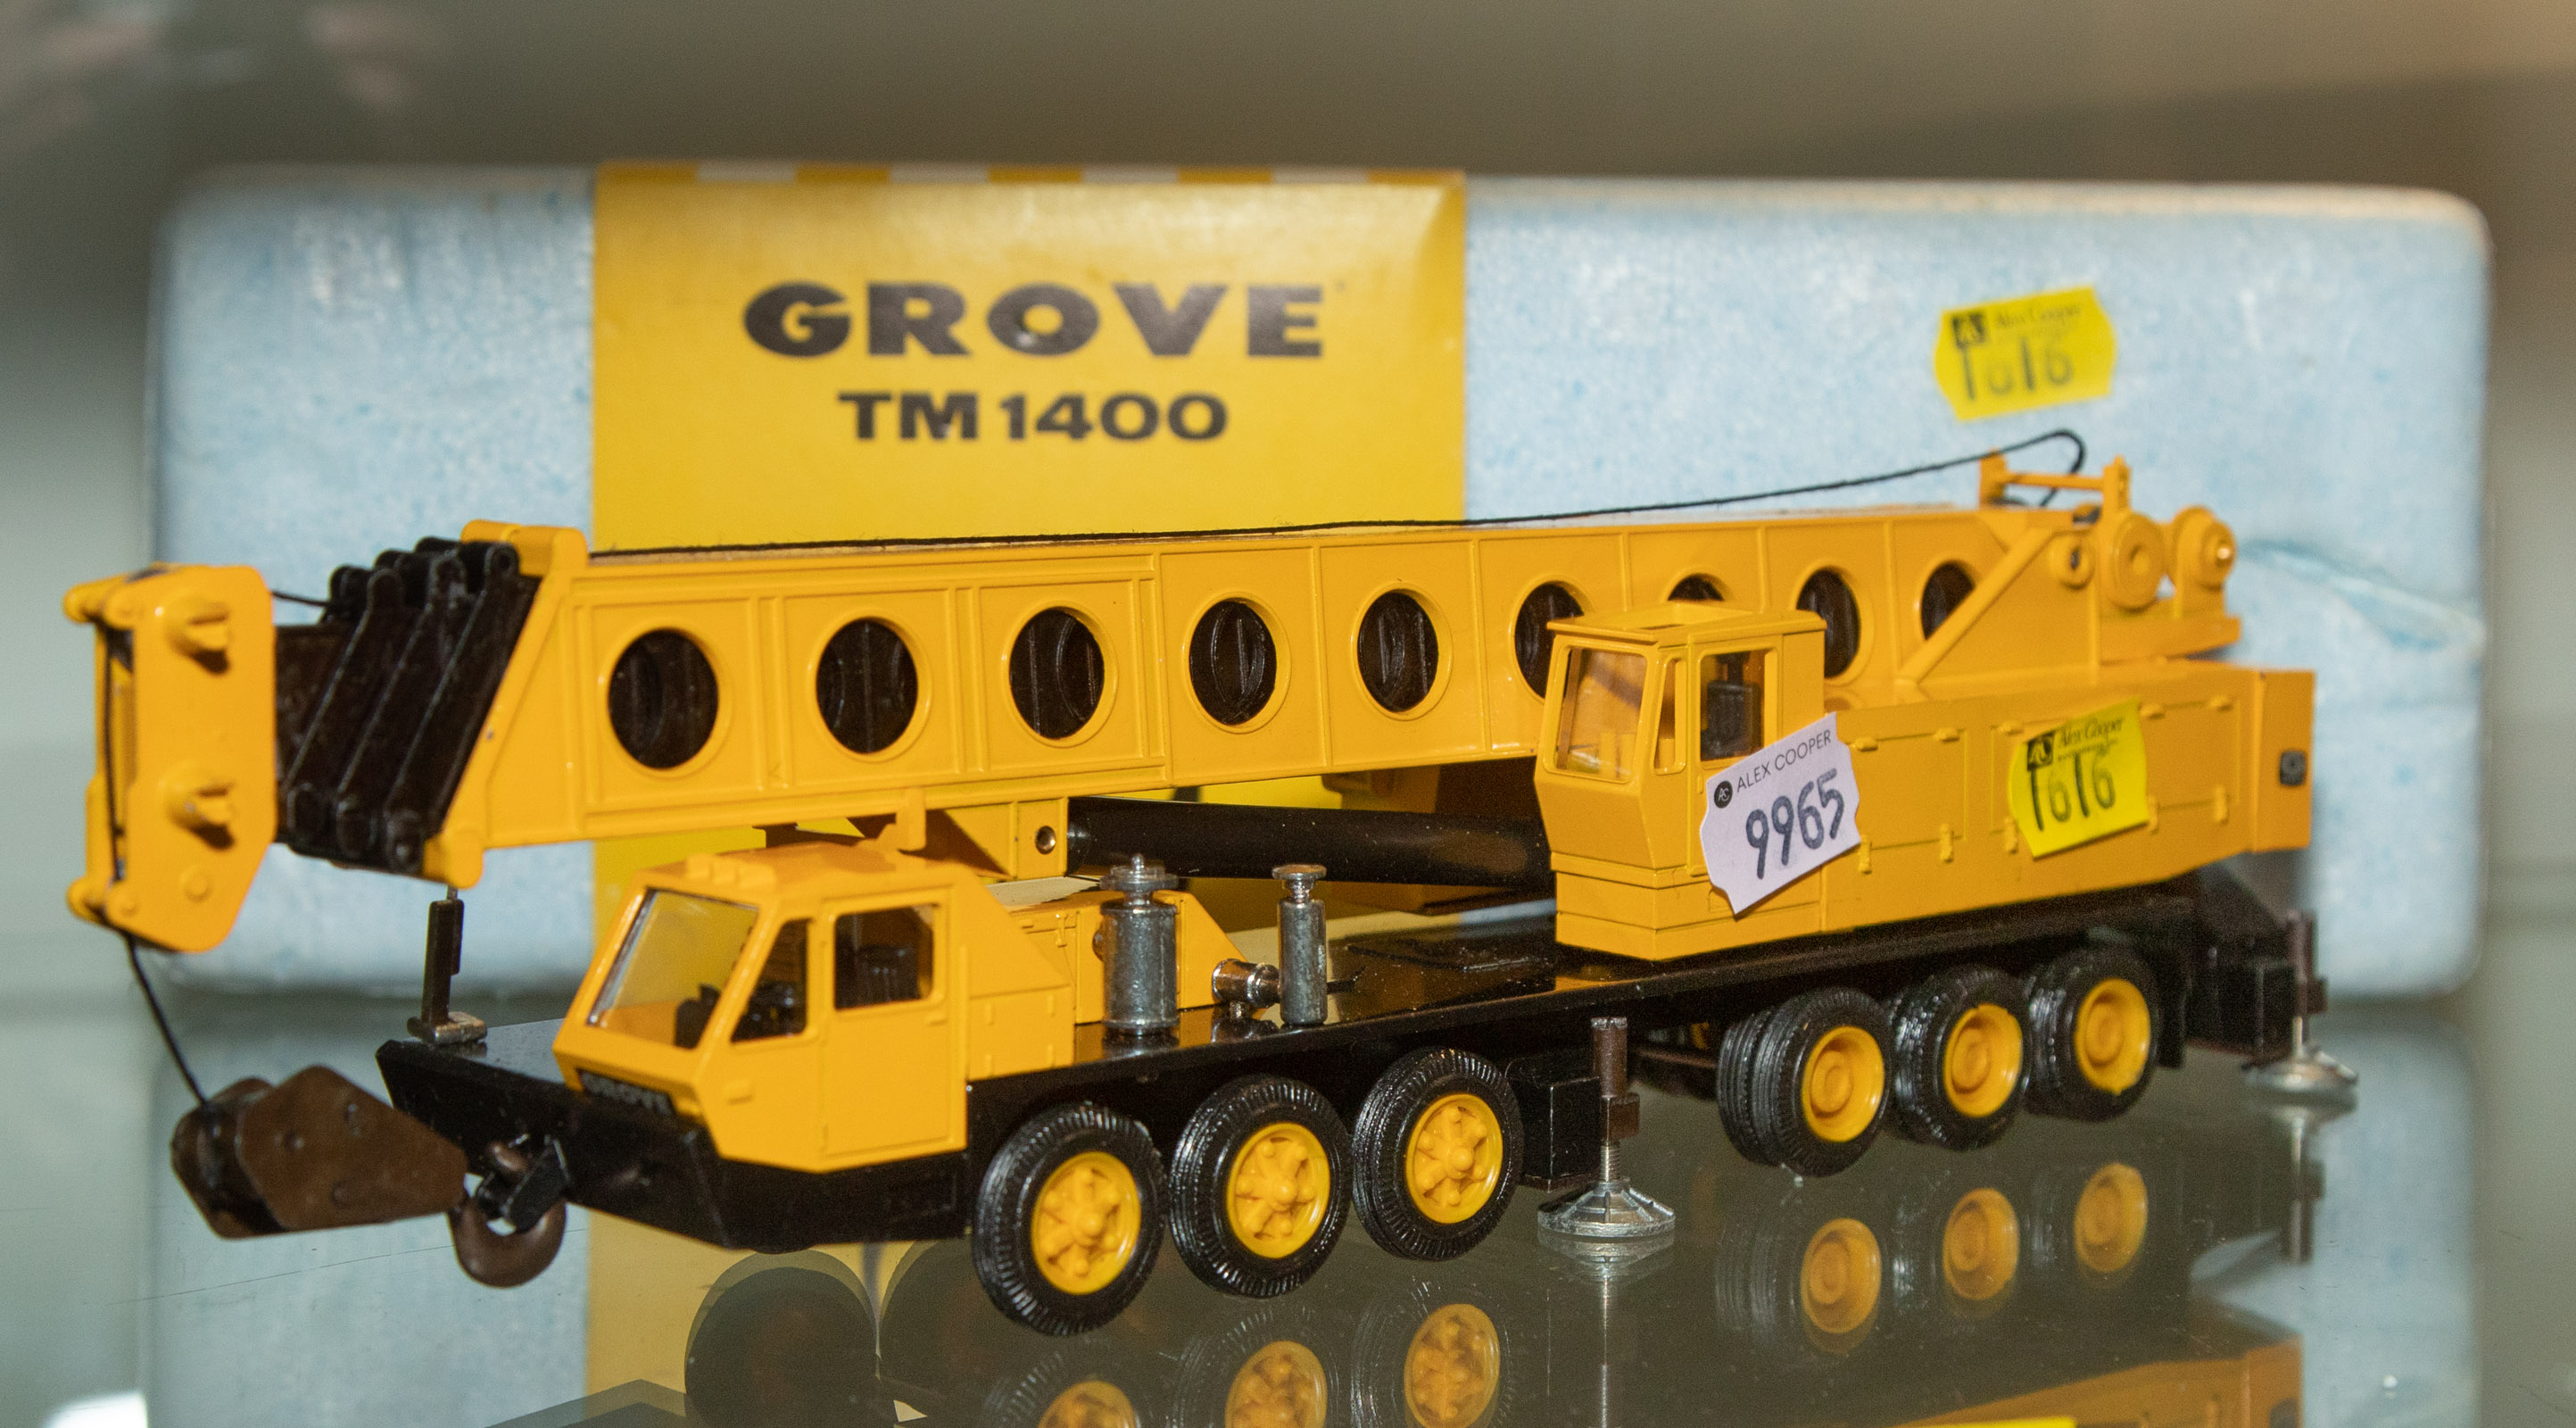 GROVE TM 1400 MOBILE TOY CRANE BY N.2.G.W.